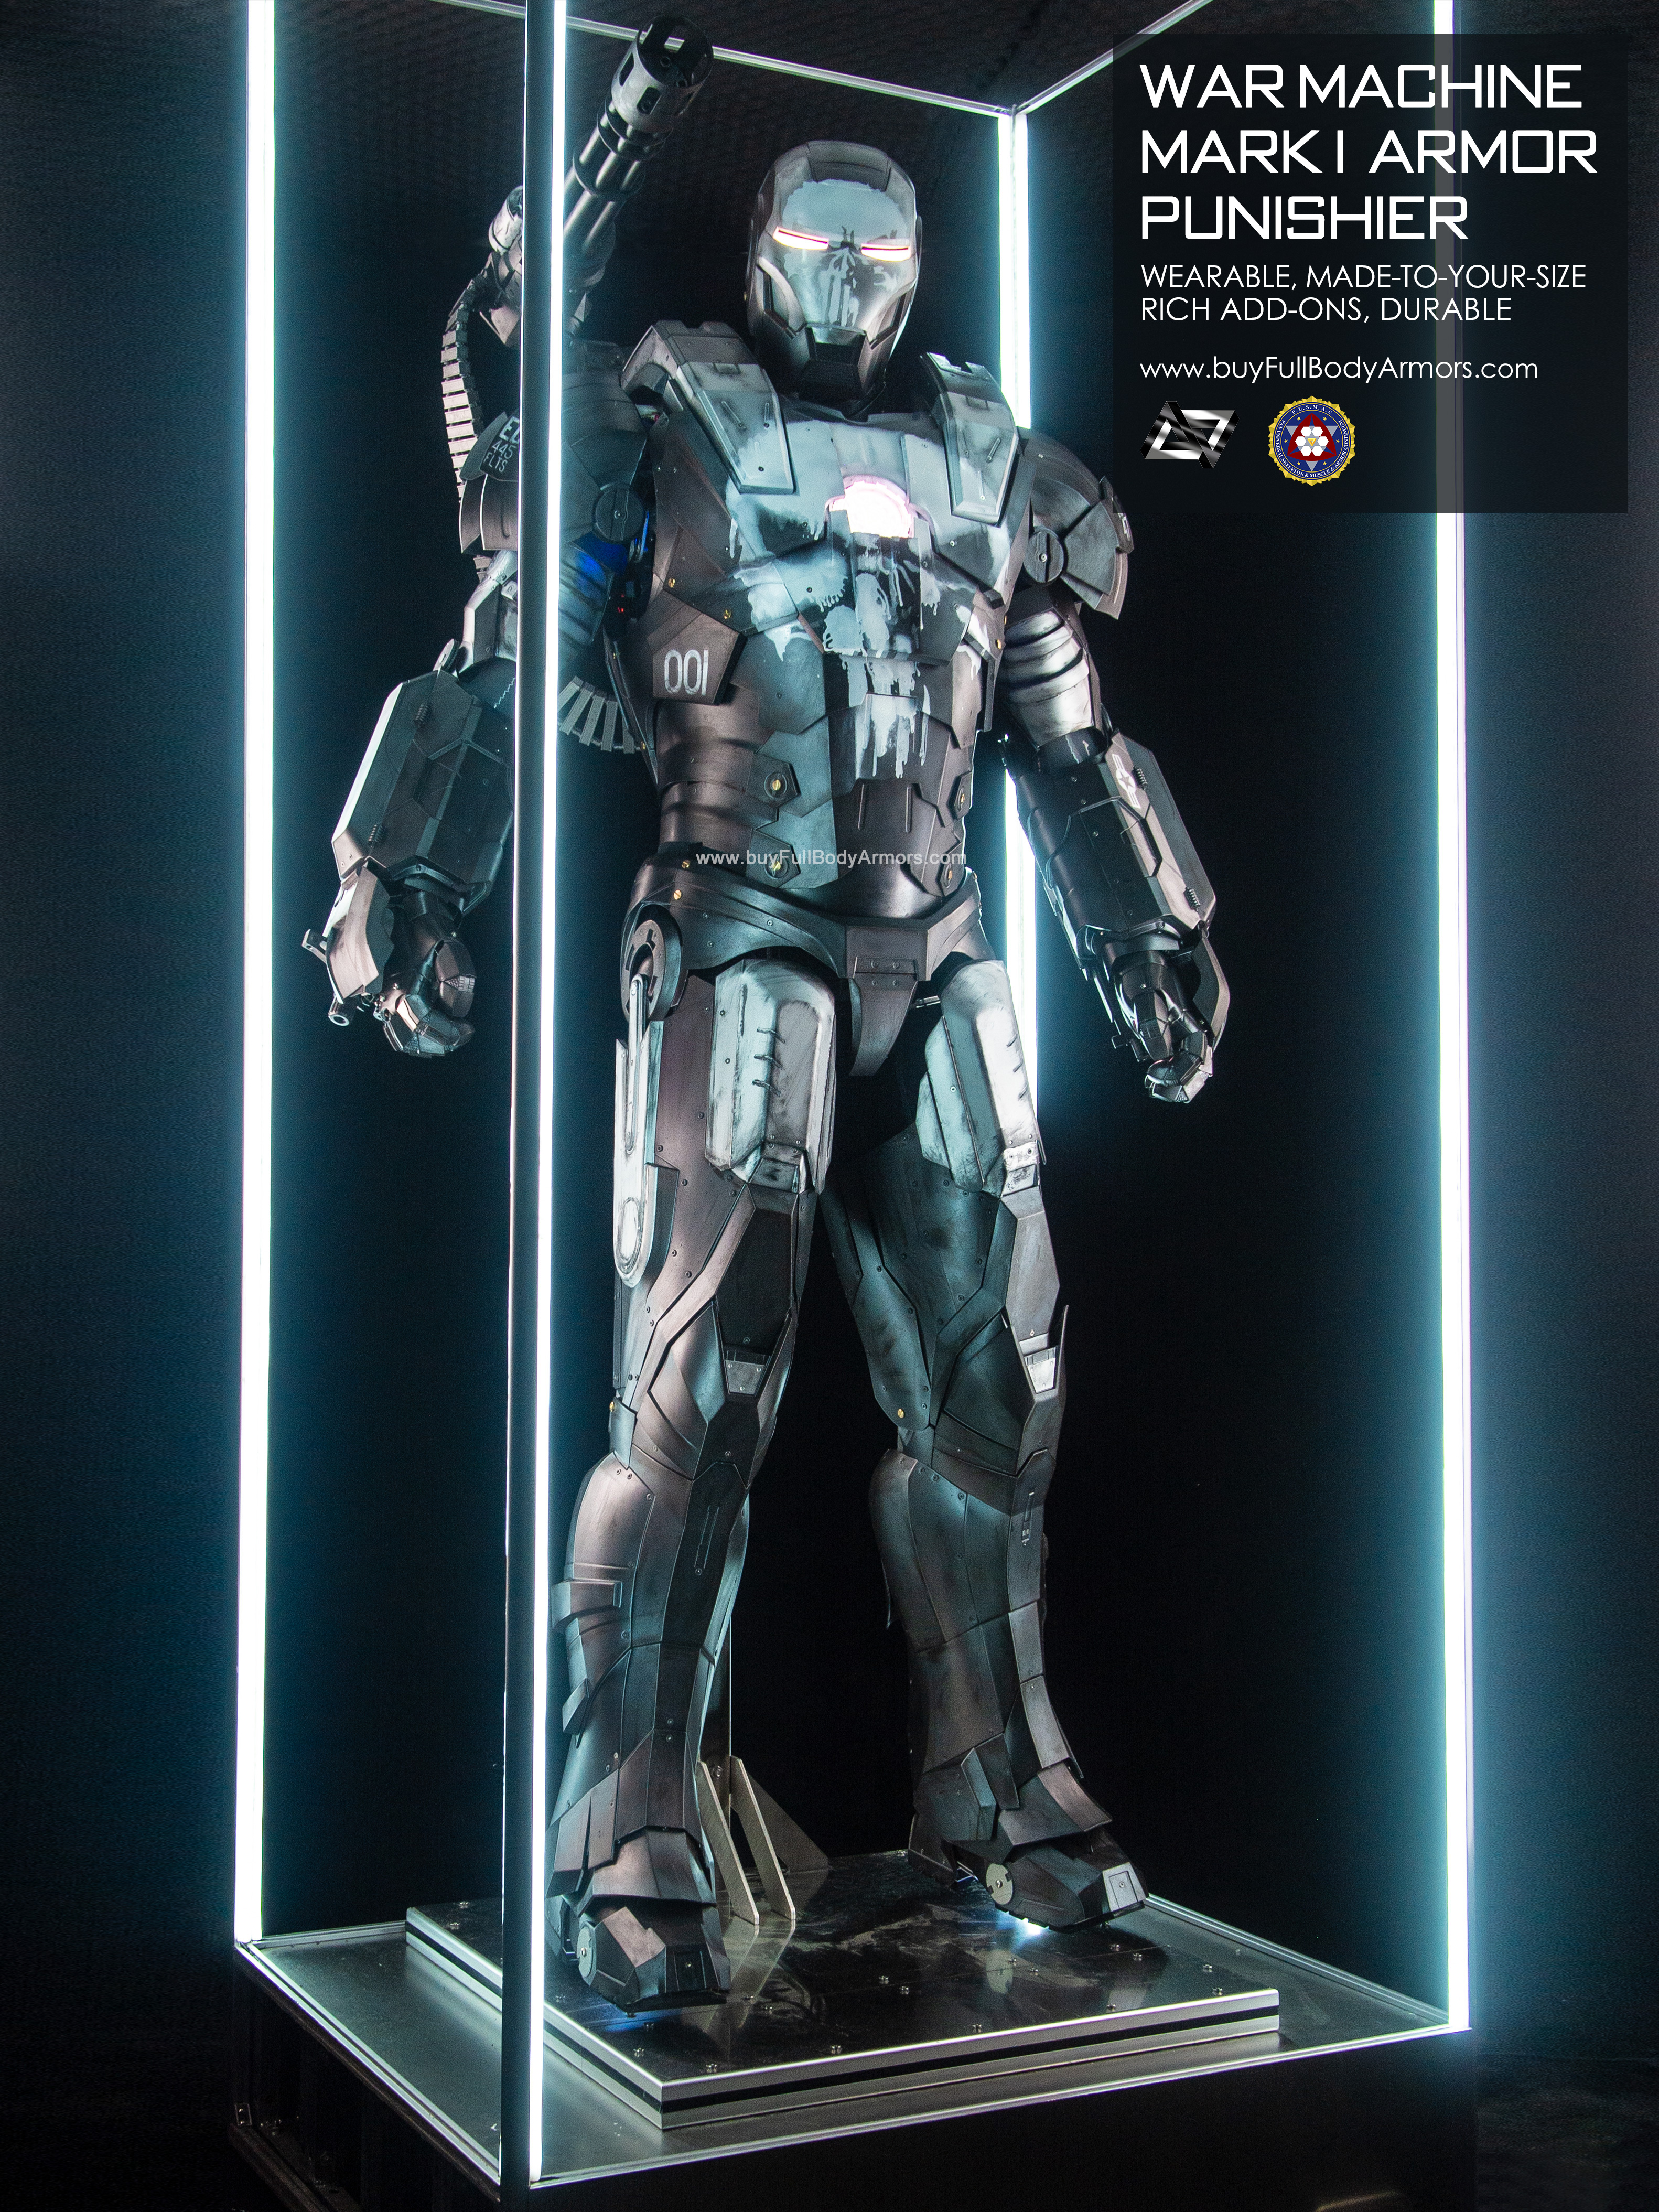 wearable War Machine suit Mark I 1 Punisher armor costume 3